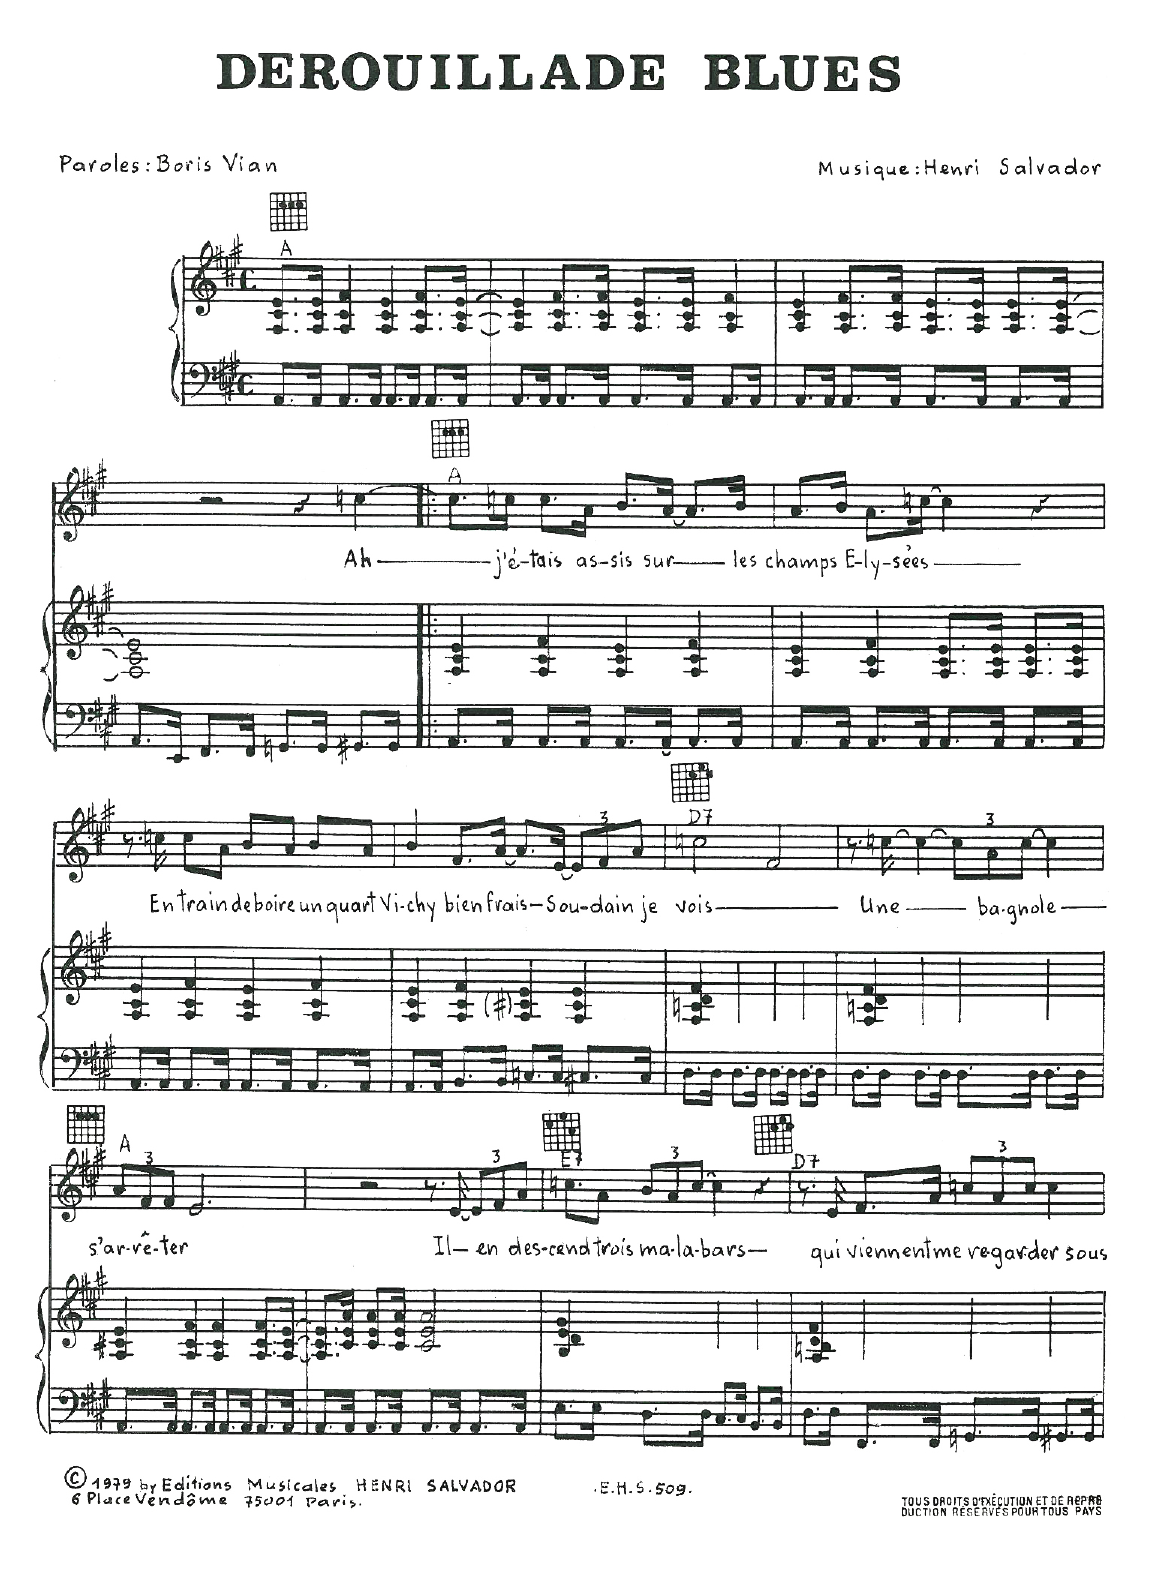 Henri Salvador Derouillade Blues Sheet Music Notes & Chords for Piano, Vocal & Guitar - Download or Print PDF